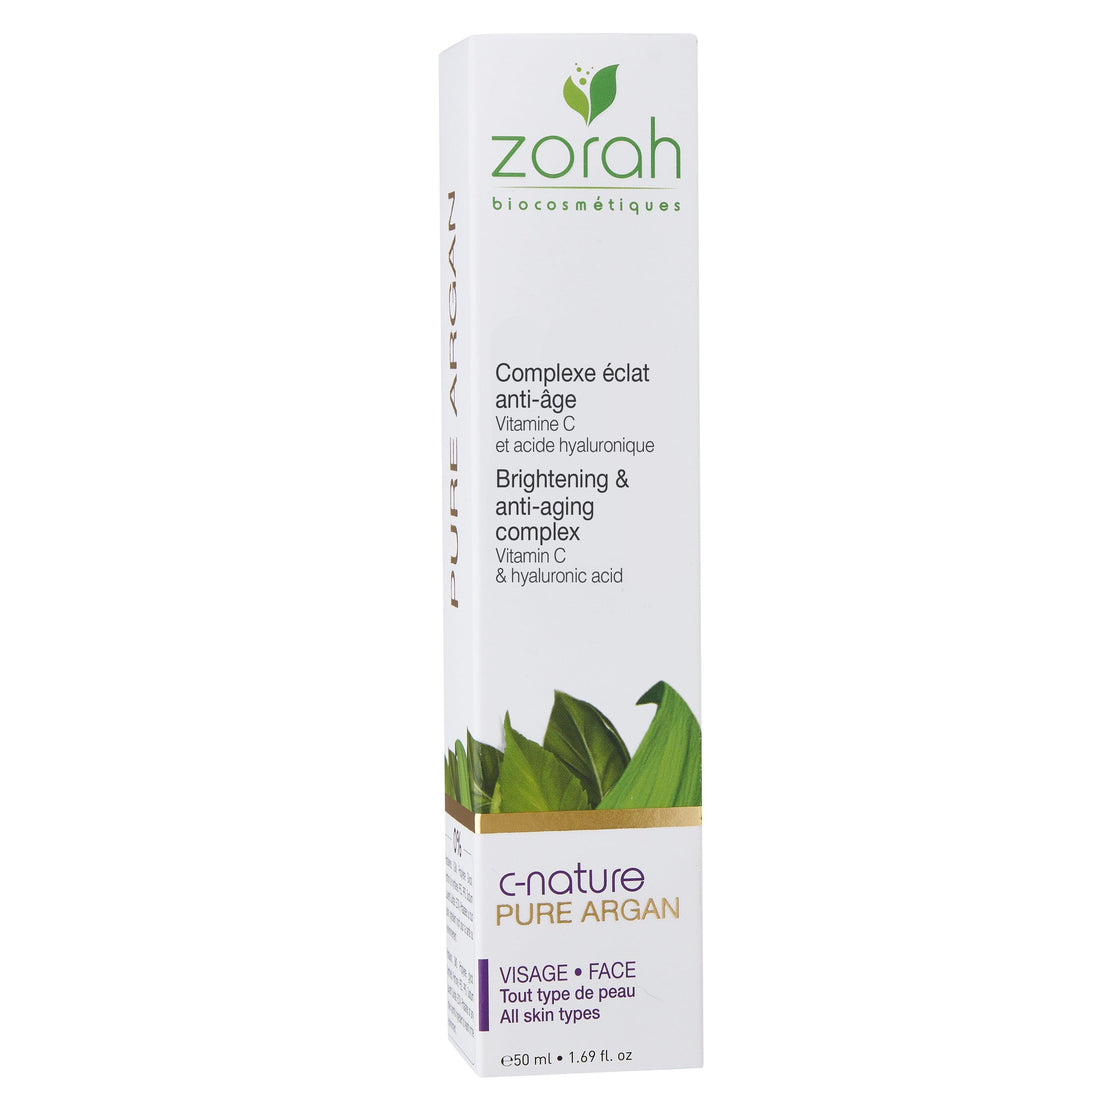 c-nature | anti-aging complex with Vitamin C - Zorah biocosmétiques